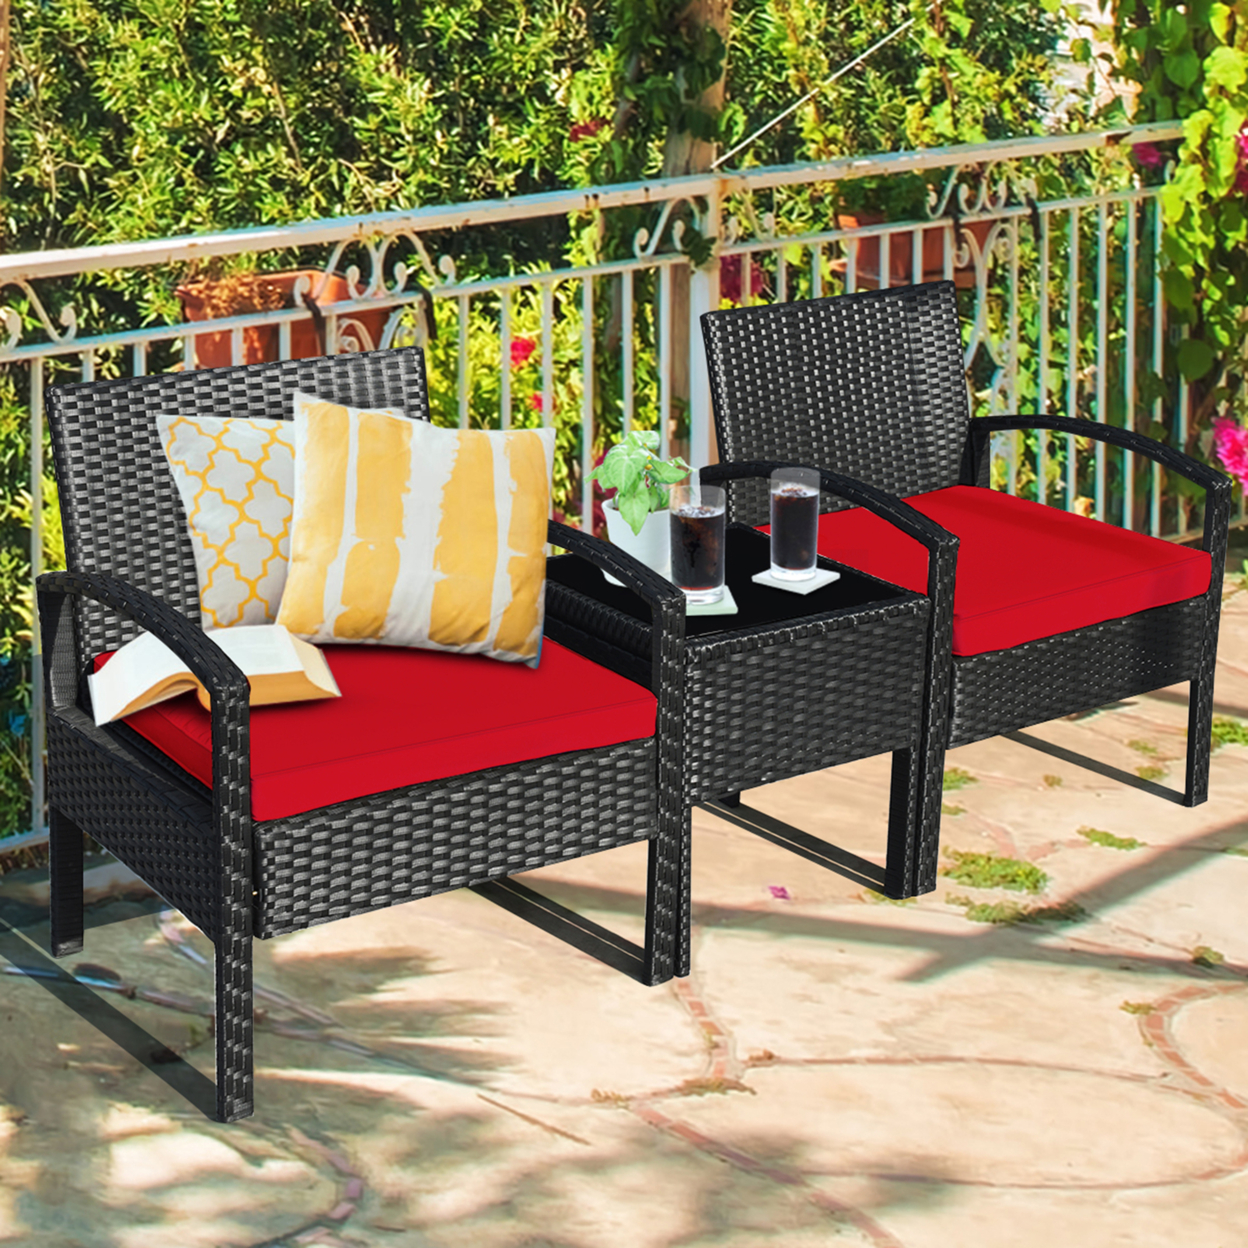 3PCS Patio Rattan Conversation Furniture Set Outdoor Yard W/ Red Cushions